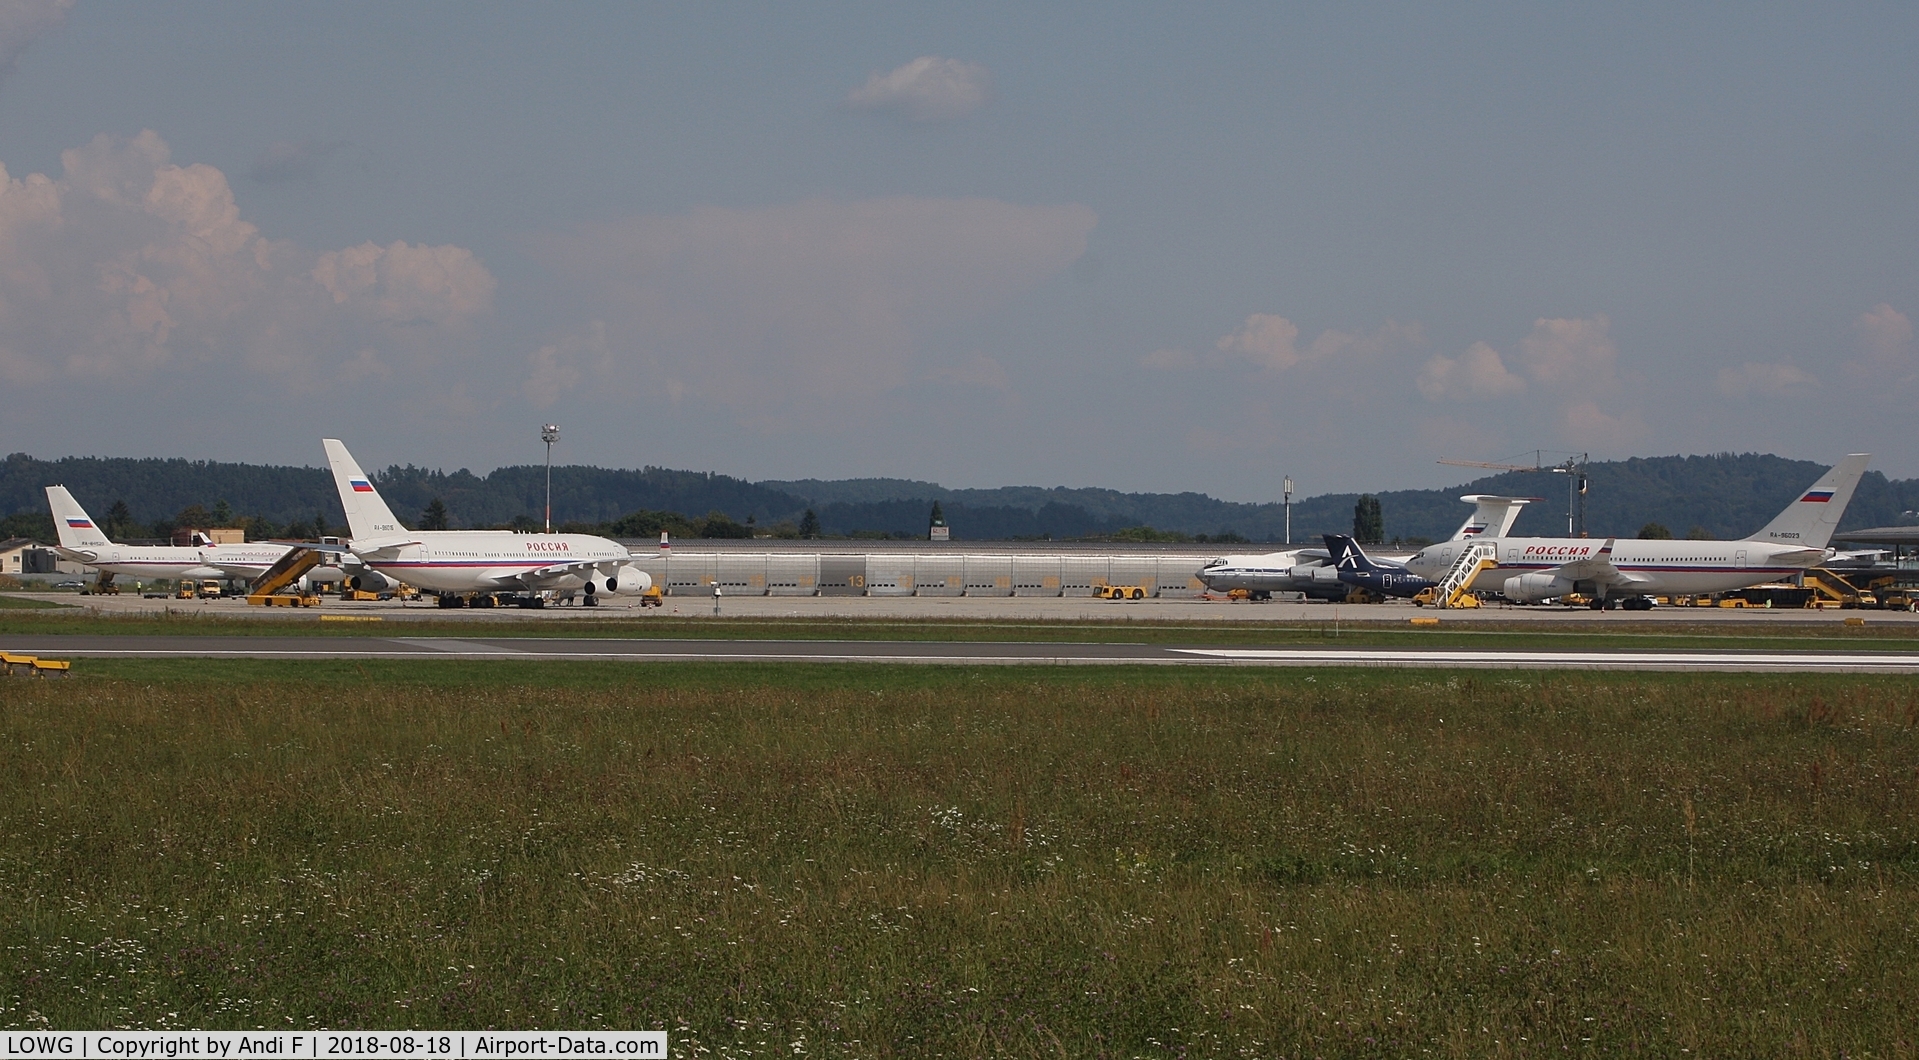 Graz Airport, Graz Austria (LOWG) - Putin Visit in Graz